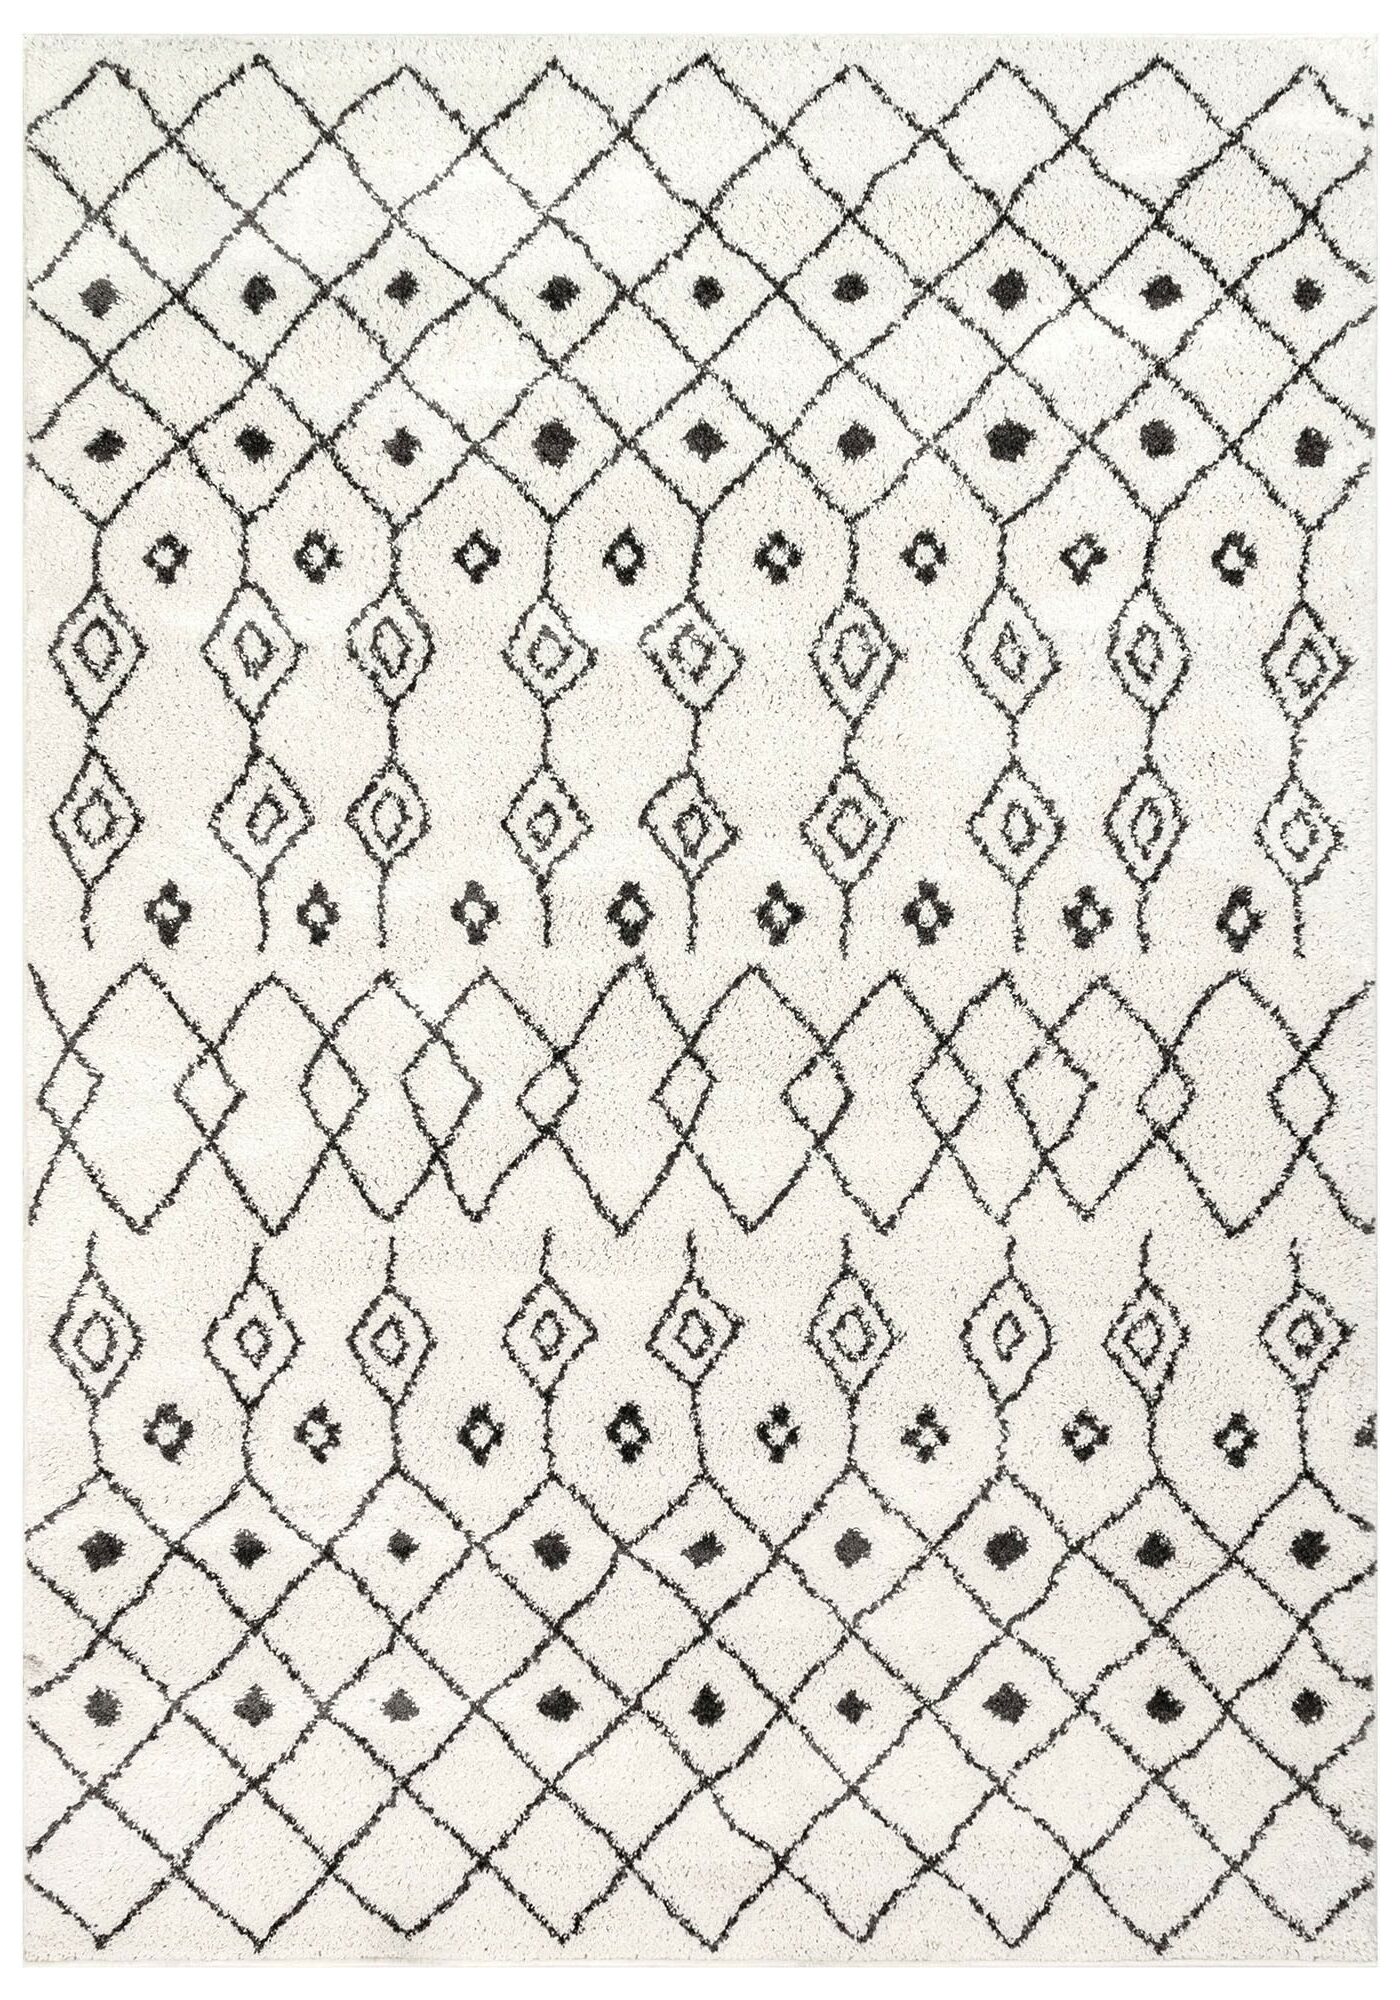 Rug design | Great Lakes Carpet & Tile